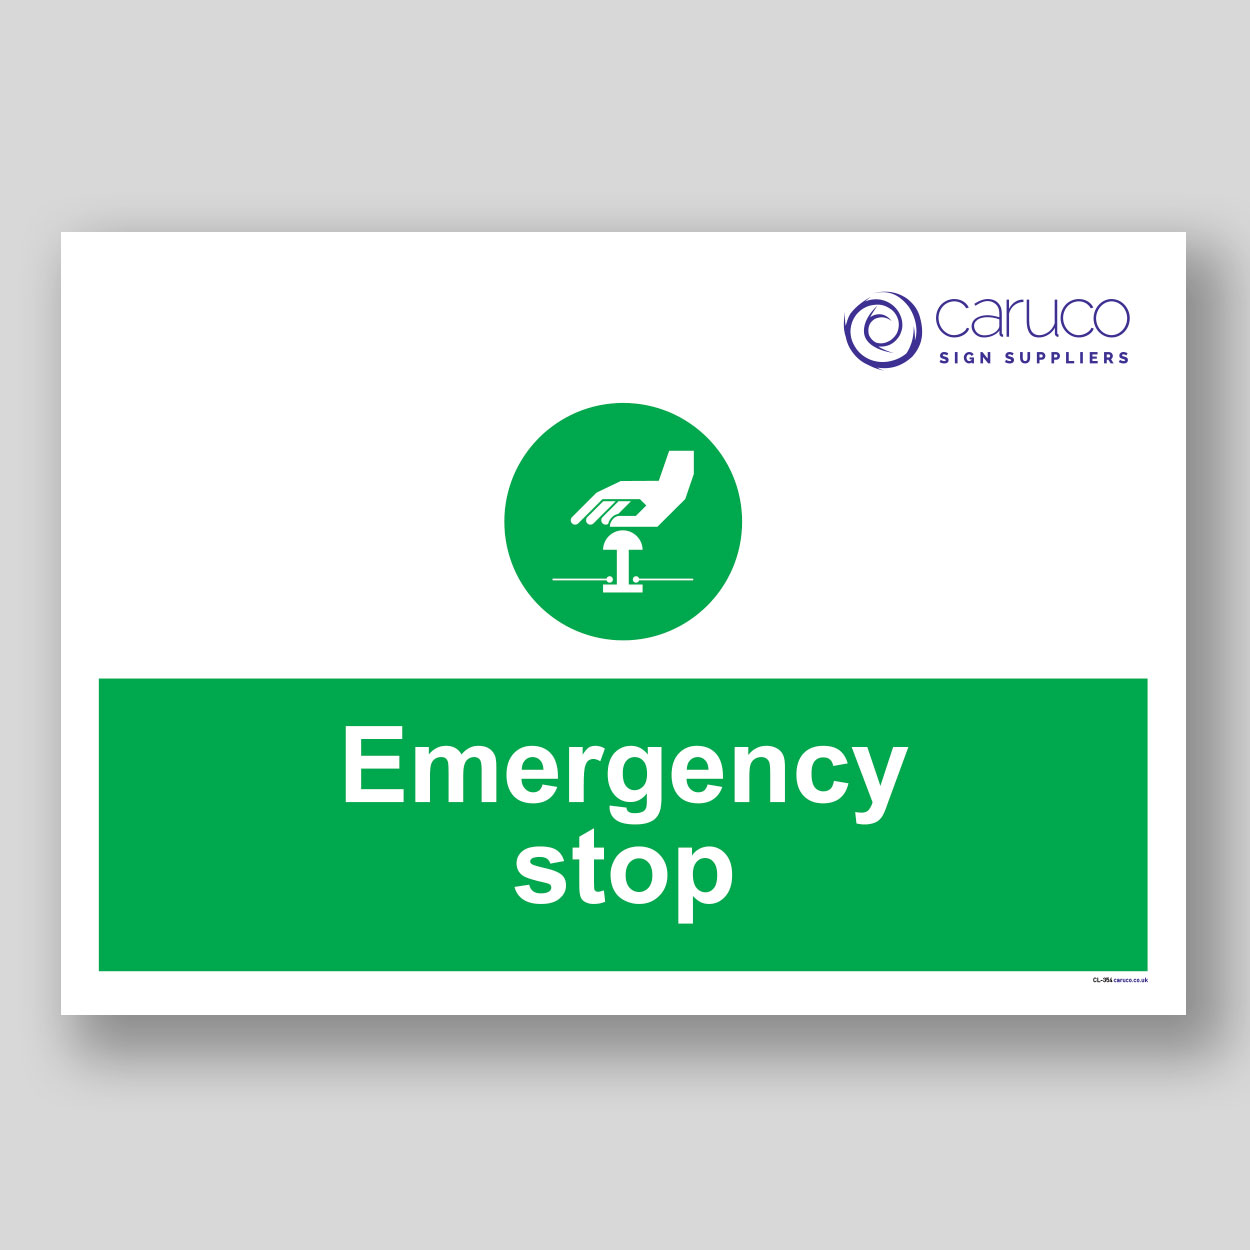 CL-354 Emergency Stop